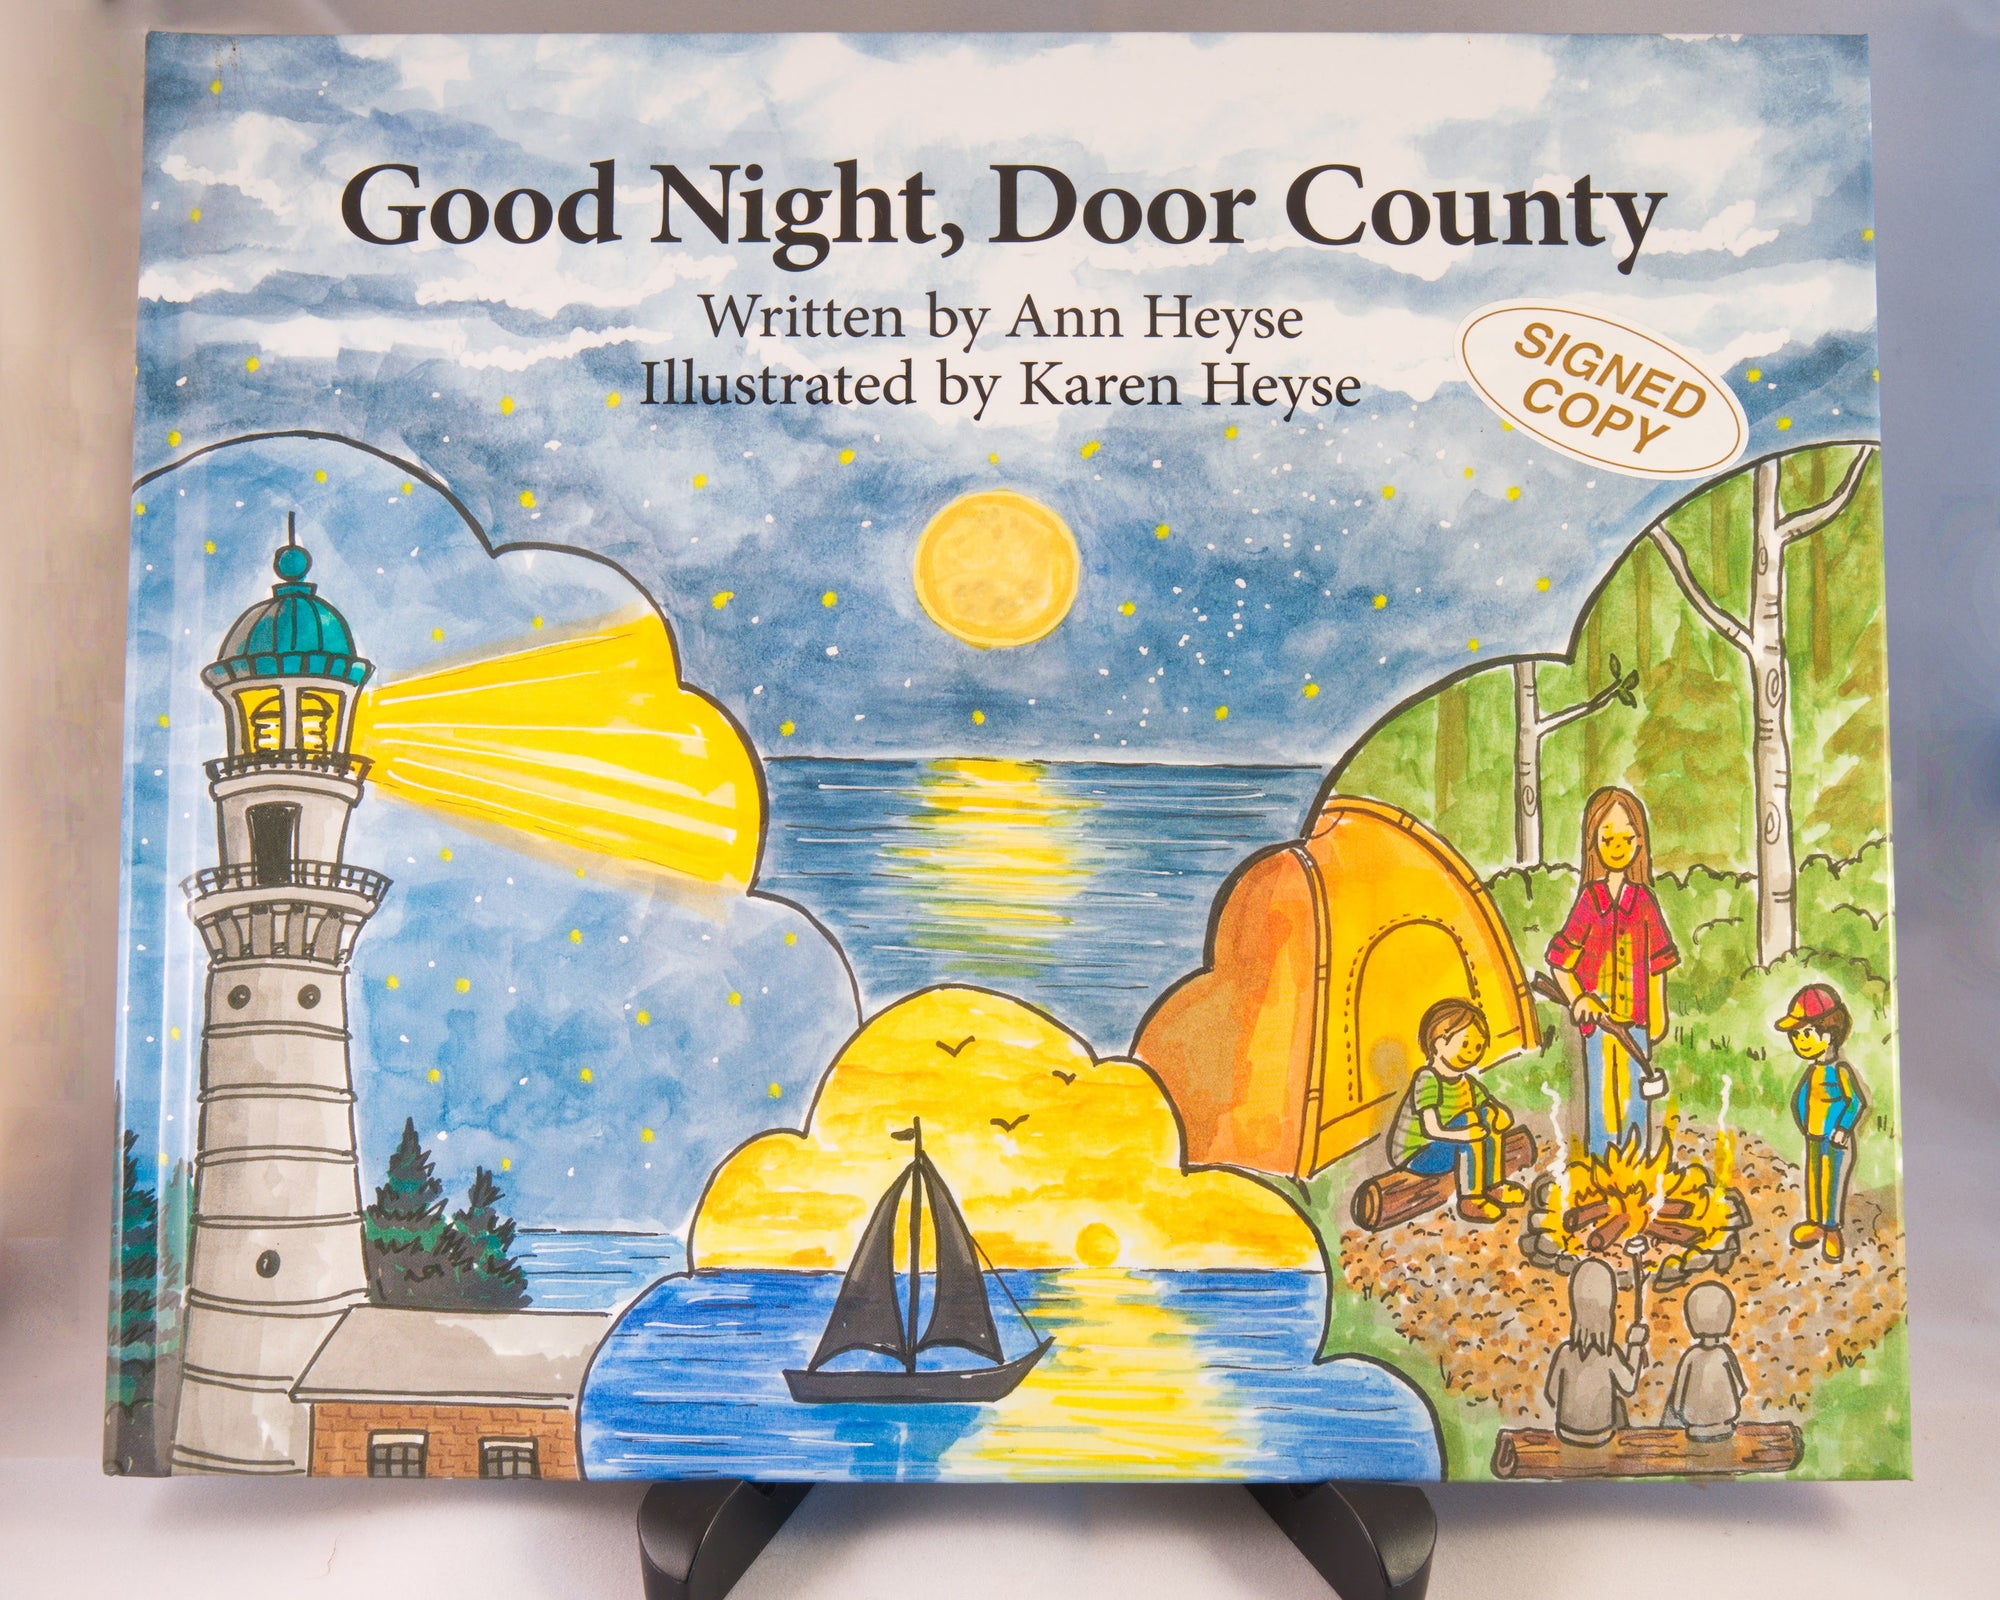 Good Night, Door County by author Anne Heyse & illustrator Karen Heyse - signed copy (IS)